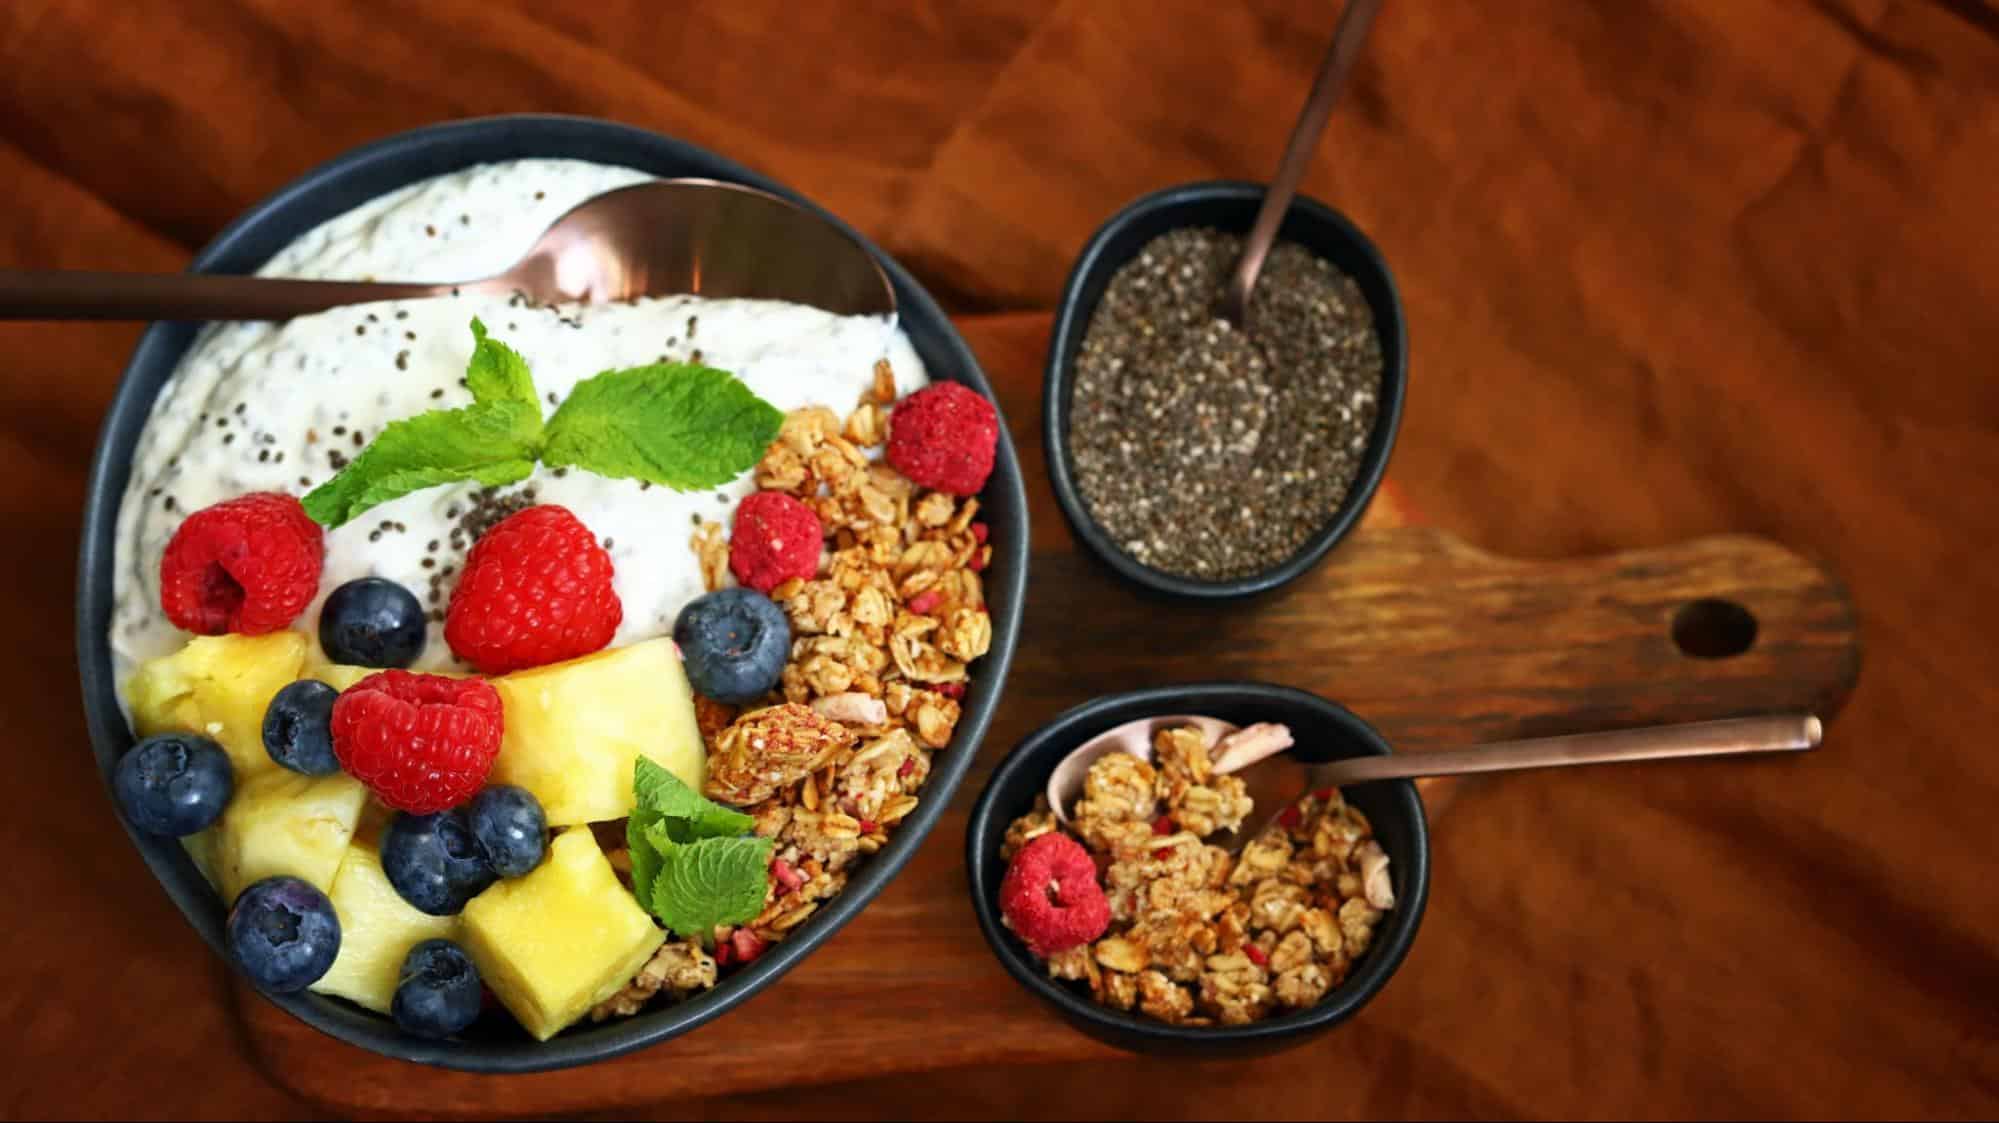 Vegan yogurt bowl with chia seeds, granola, and mixed berries, and pineapple